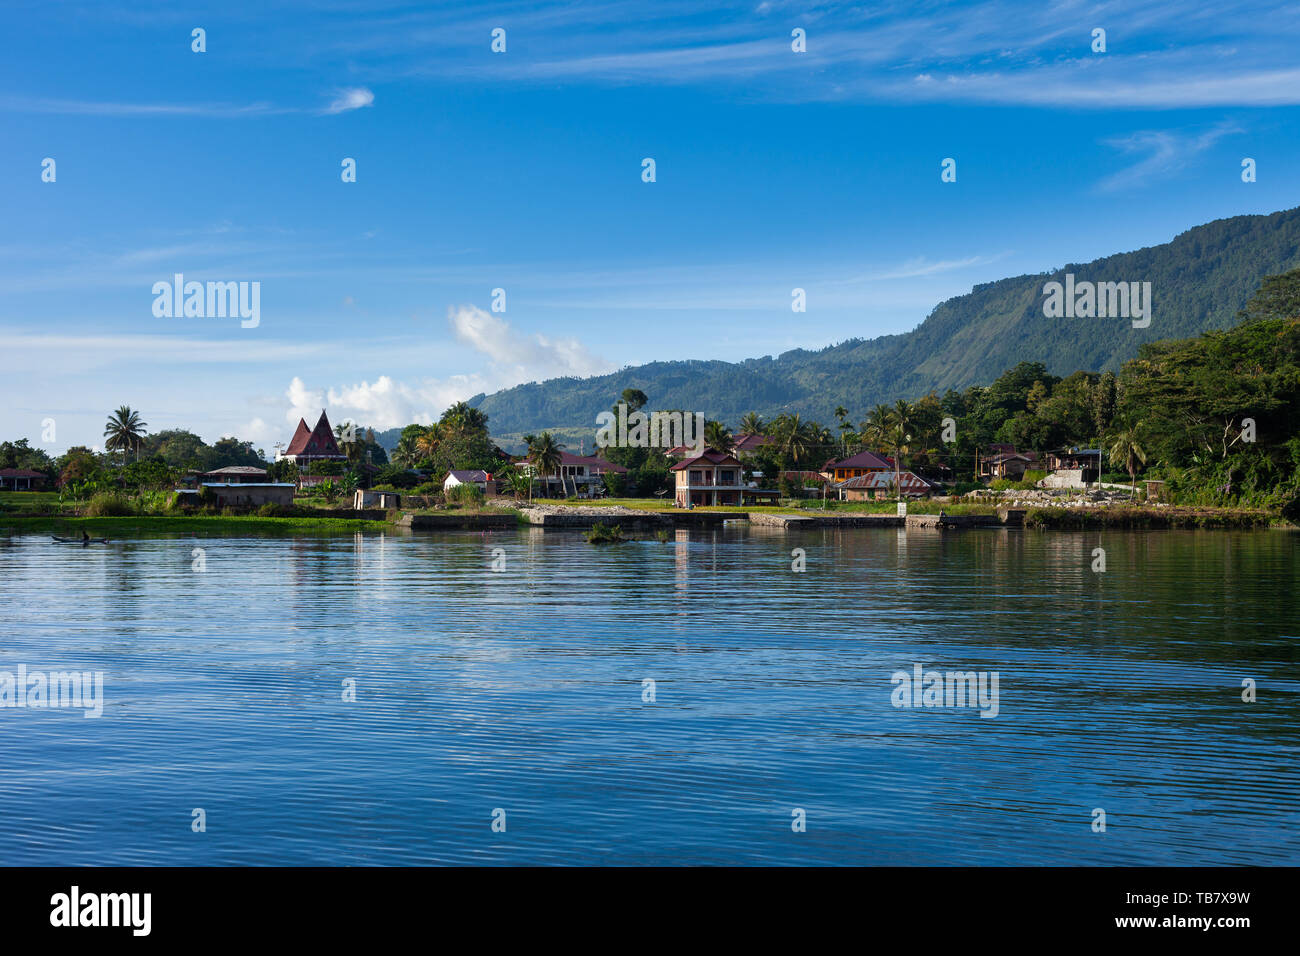 Houses and hotels on Lake Toba at Tuk Tuk peninsula, Samosir Island, Sumatra, Indonesia Stock Photo